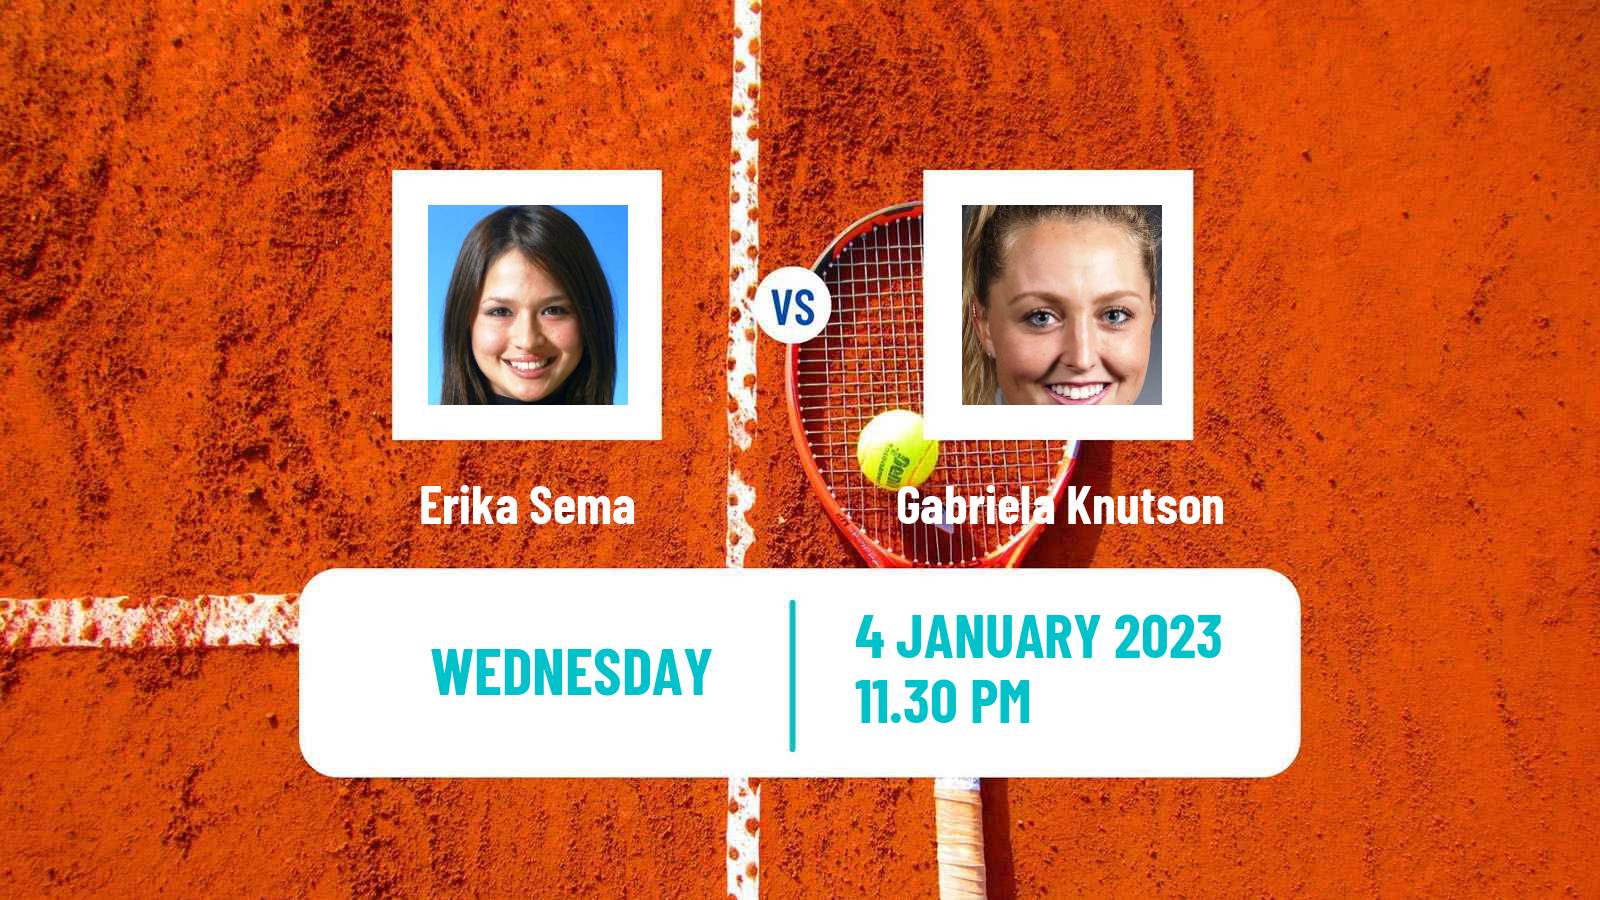 Tennis ITF Tournaments Erika Sema - Gabriela Knutson